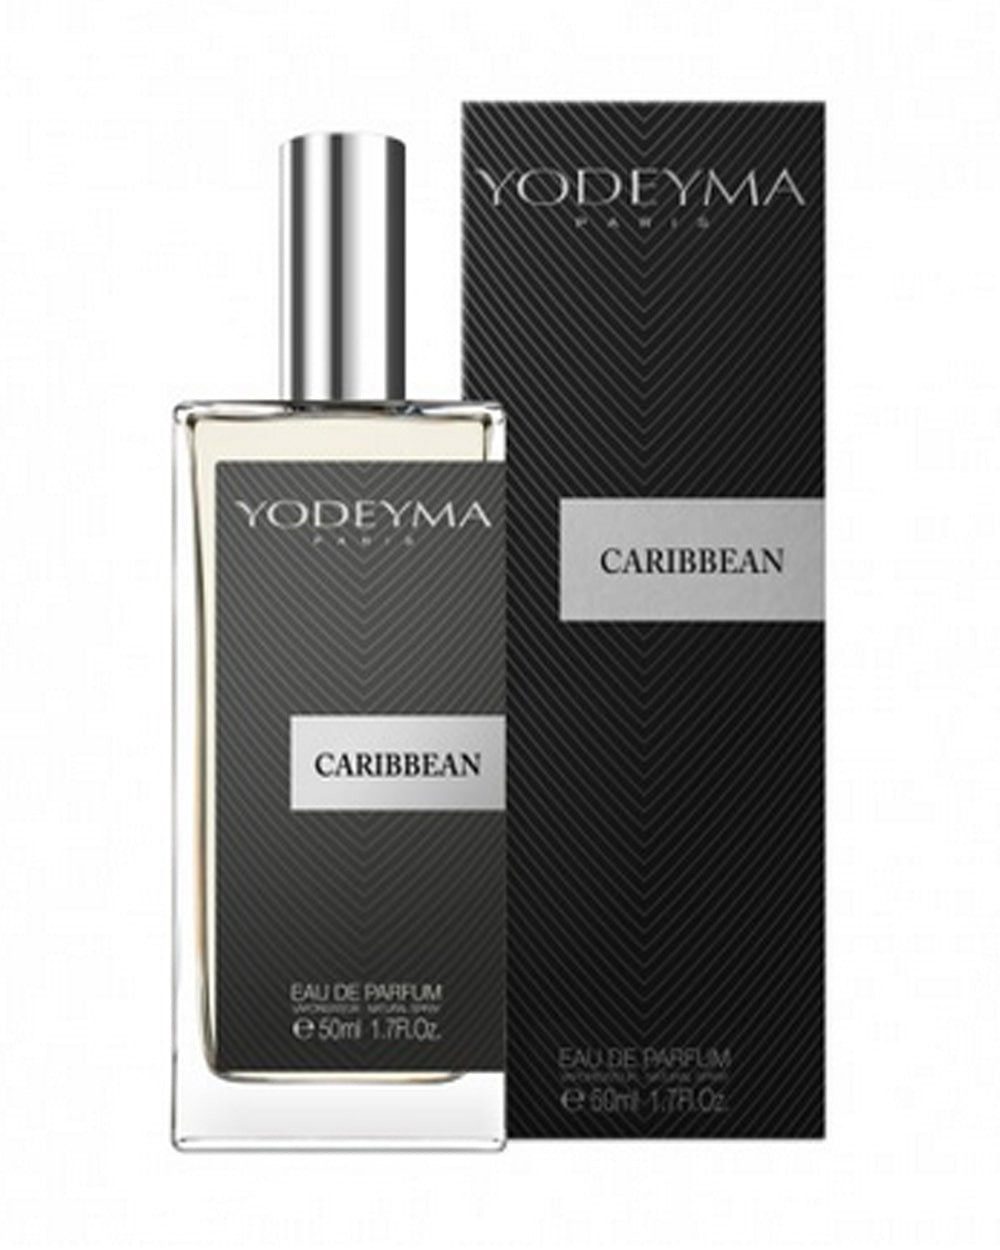 Eau de Parfum YODEYMA Parfum Caribbean - Eau de Parfum für Herren 50 ml